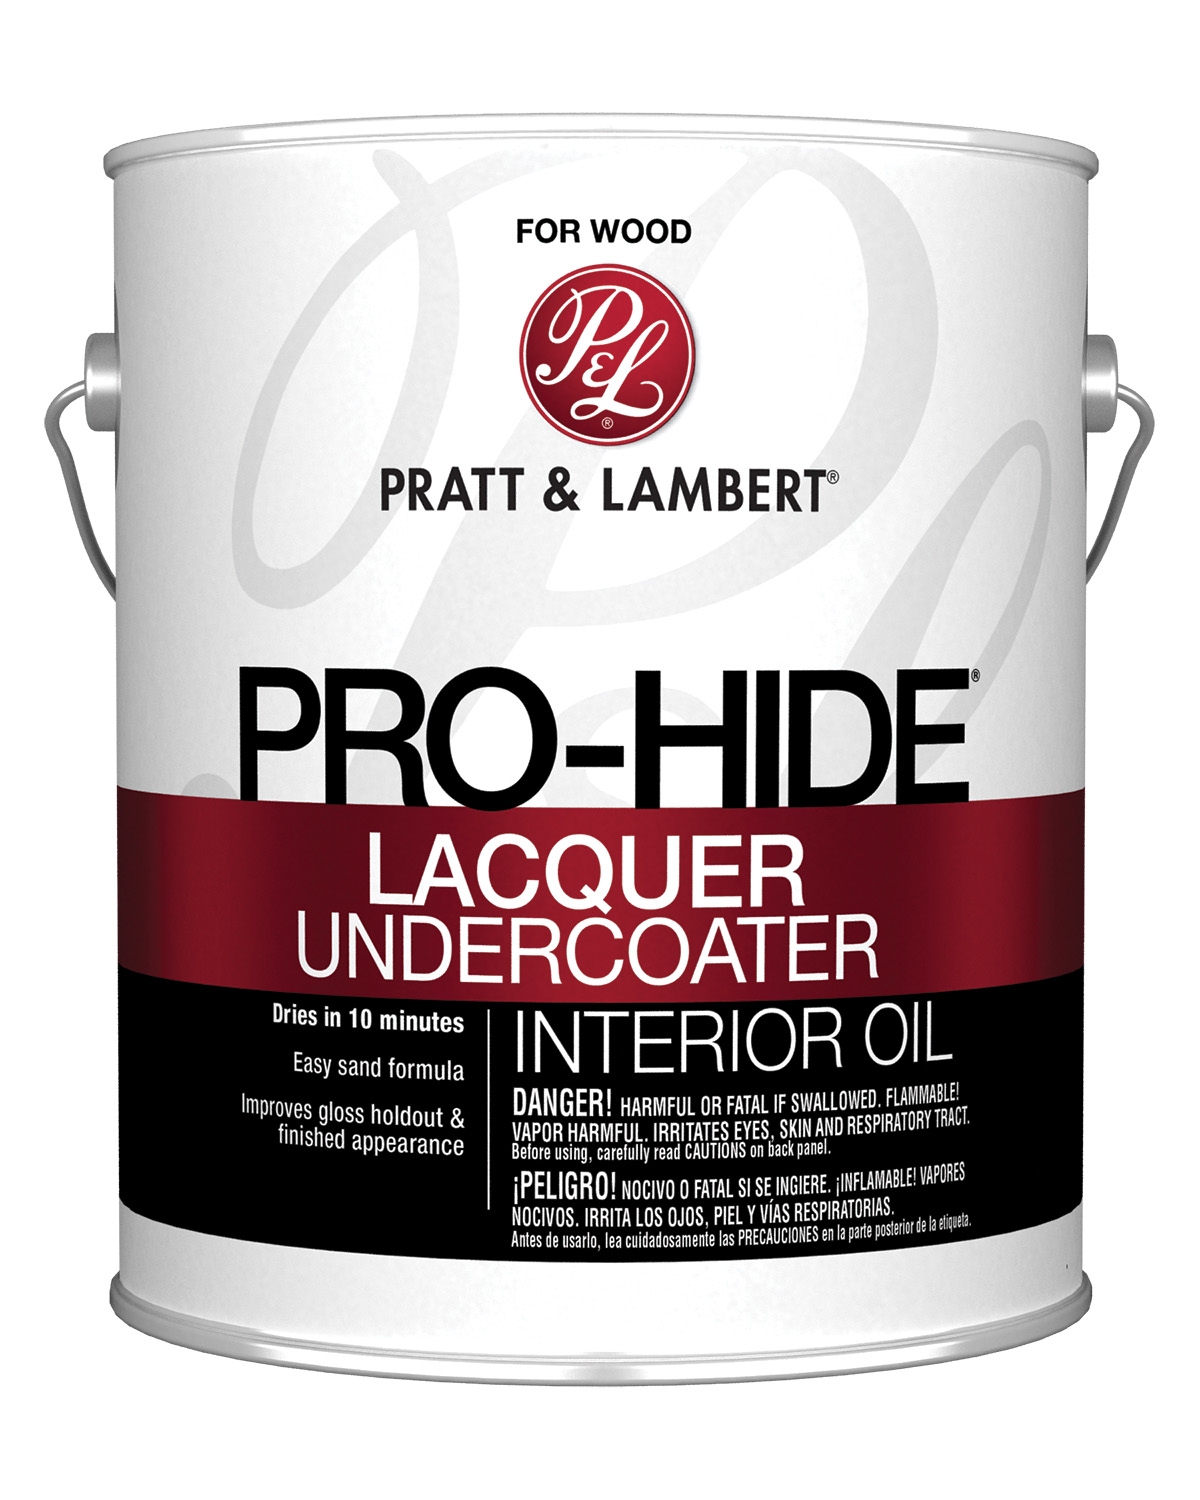 Pratt & Lambert Pro-Hide Lacquer Undercoater